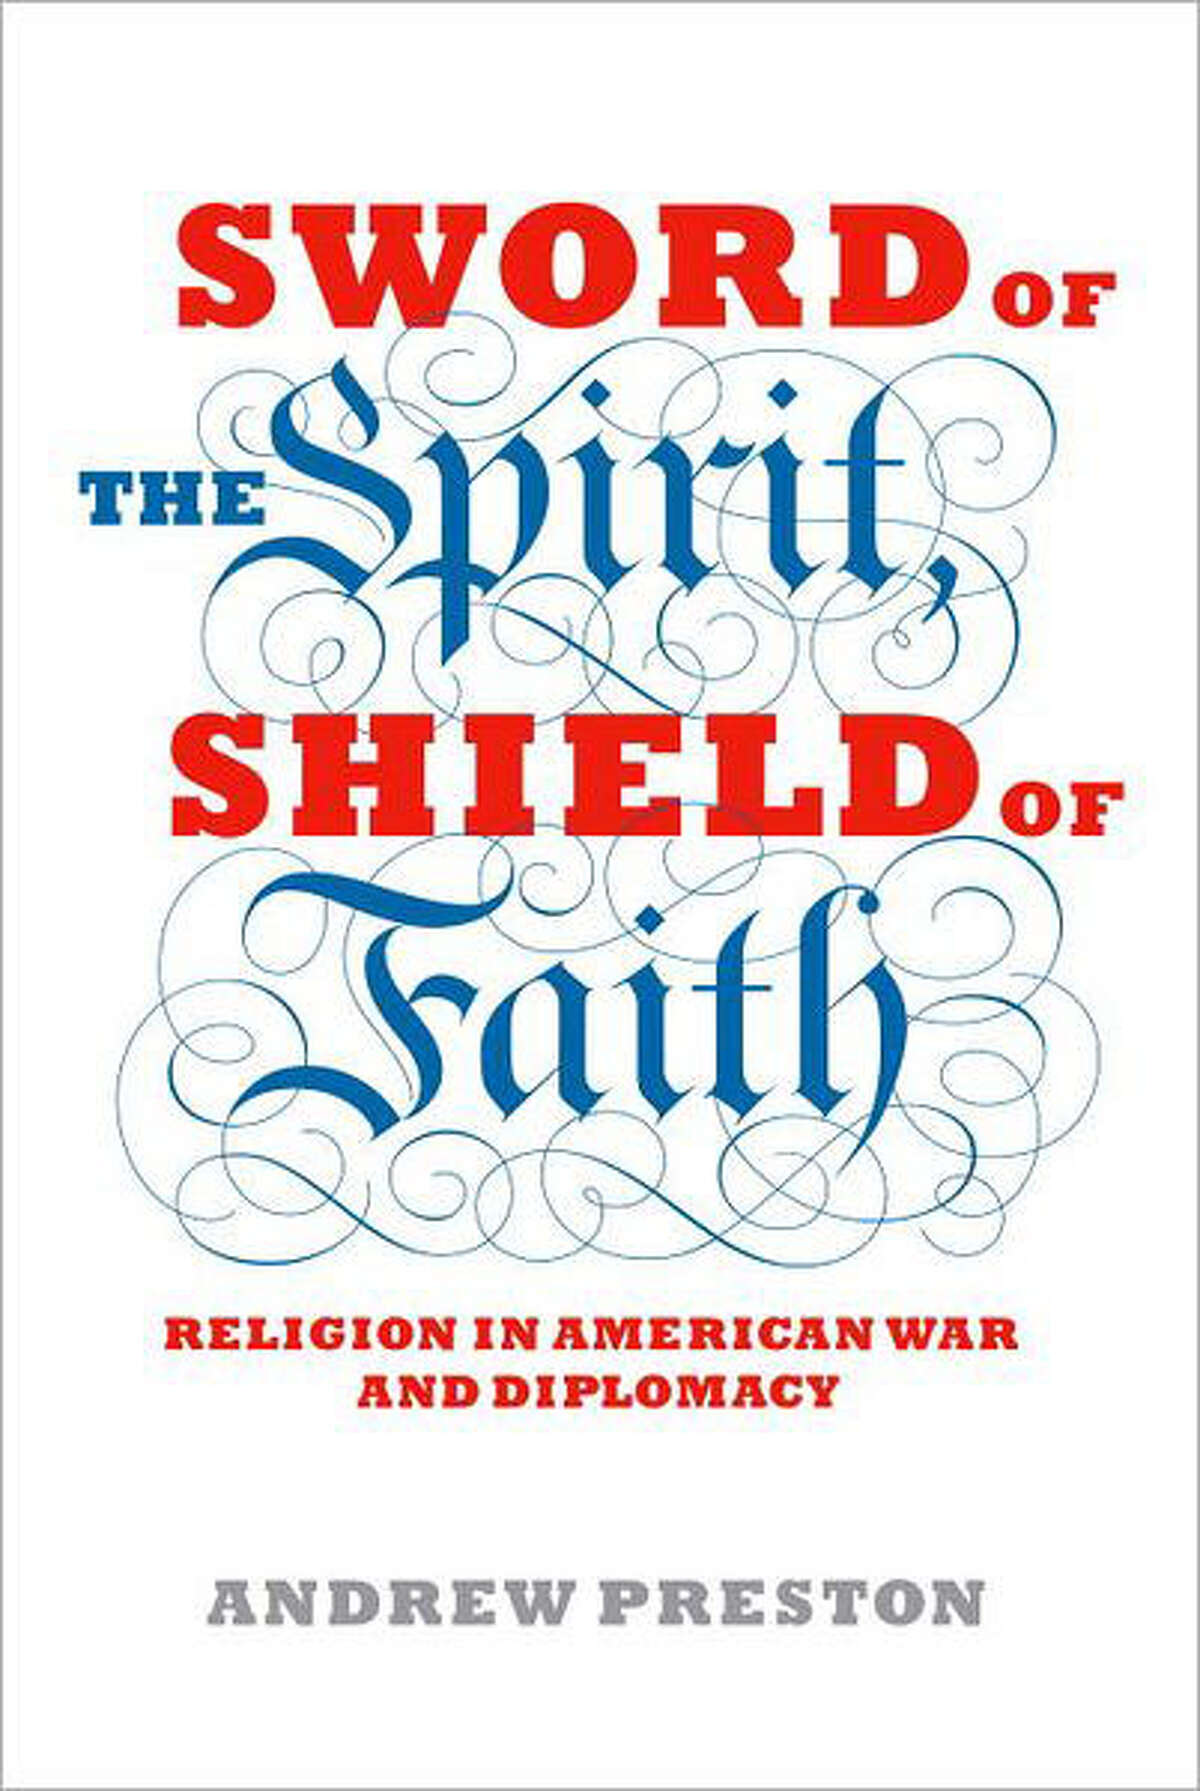 "Sword of the Spirit Shield of Faith" by Andrew Preston